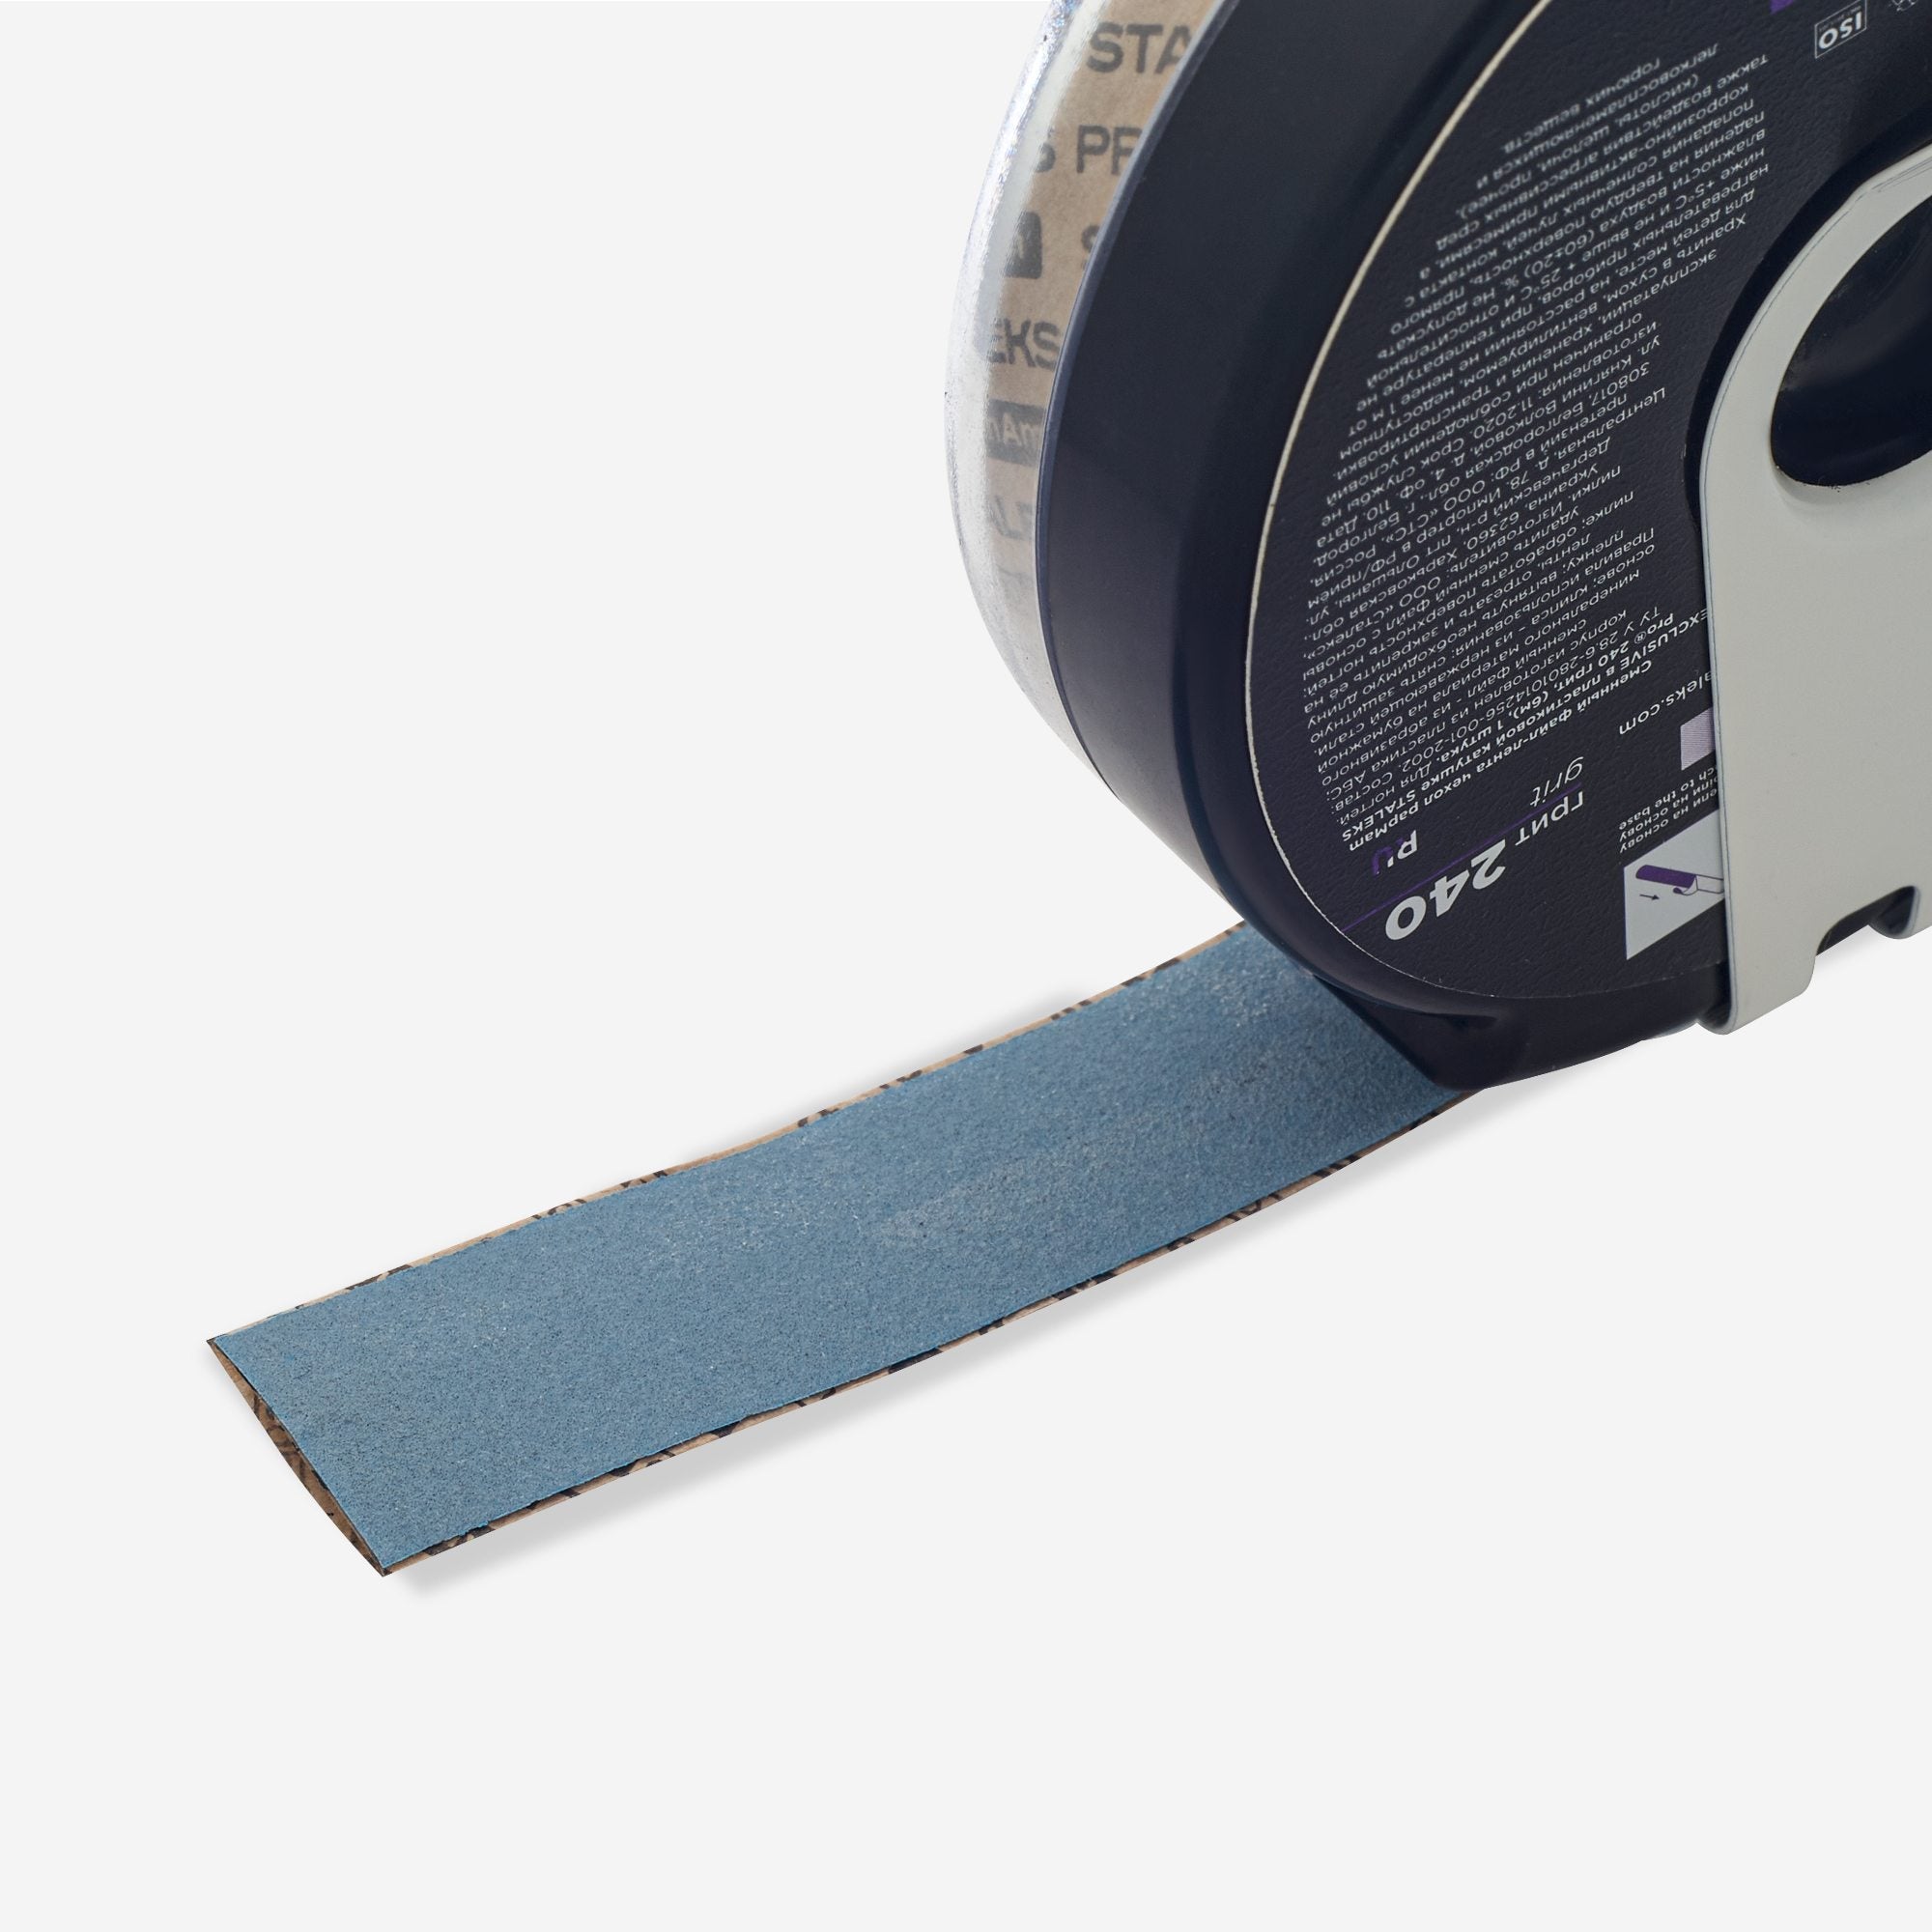 Disposable abrasive tape papmAm EXCLUSIVE  in a plastic case